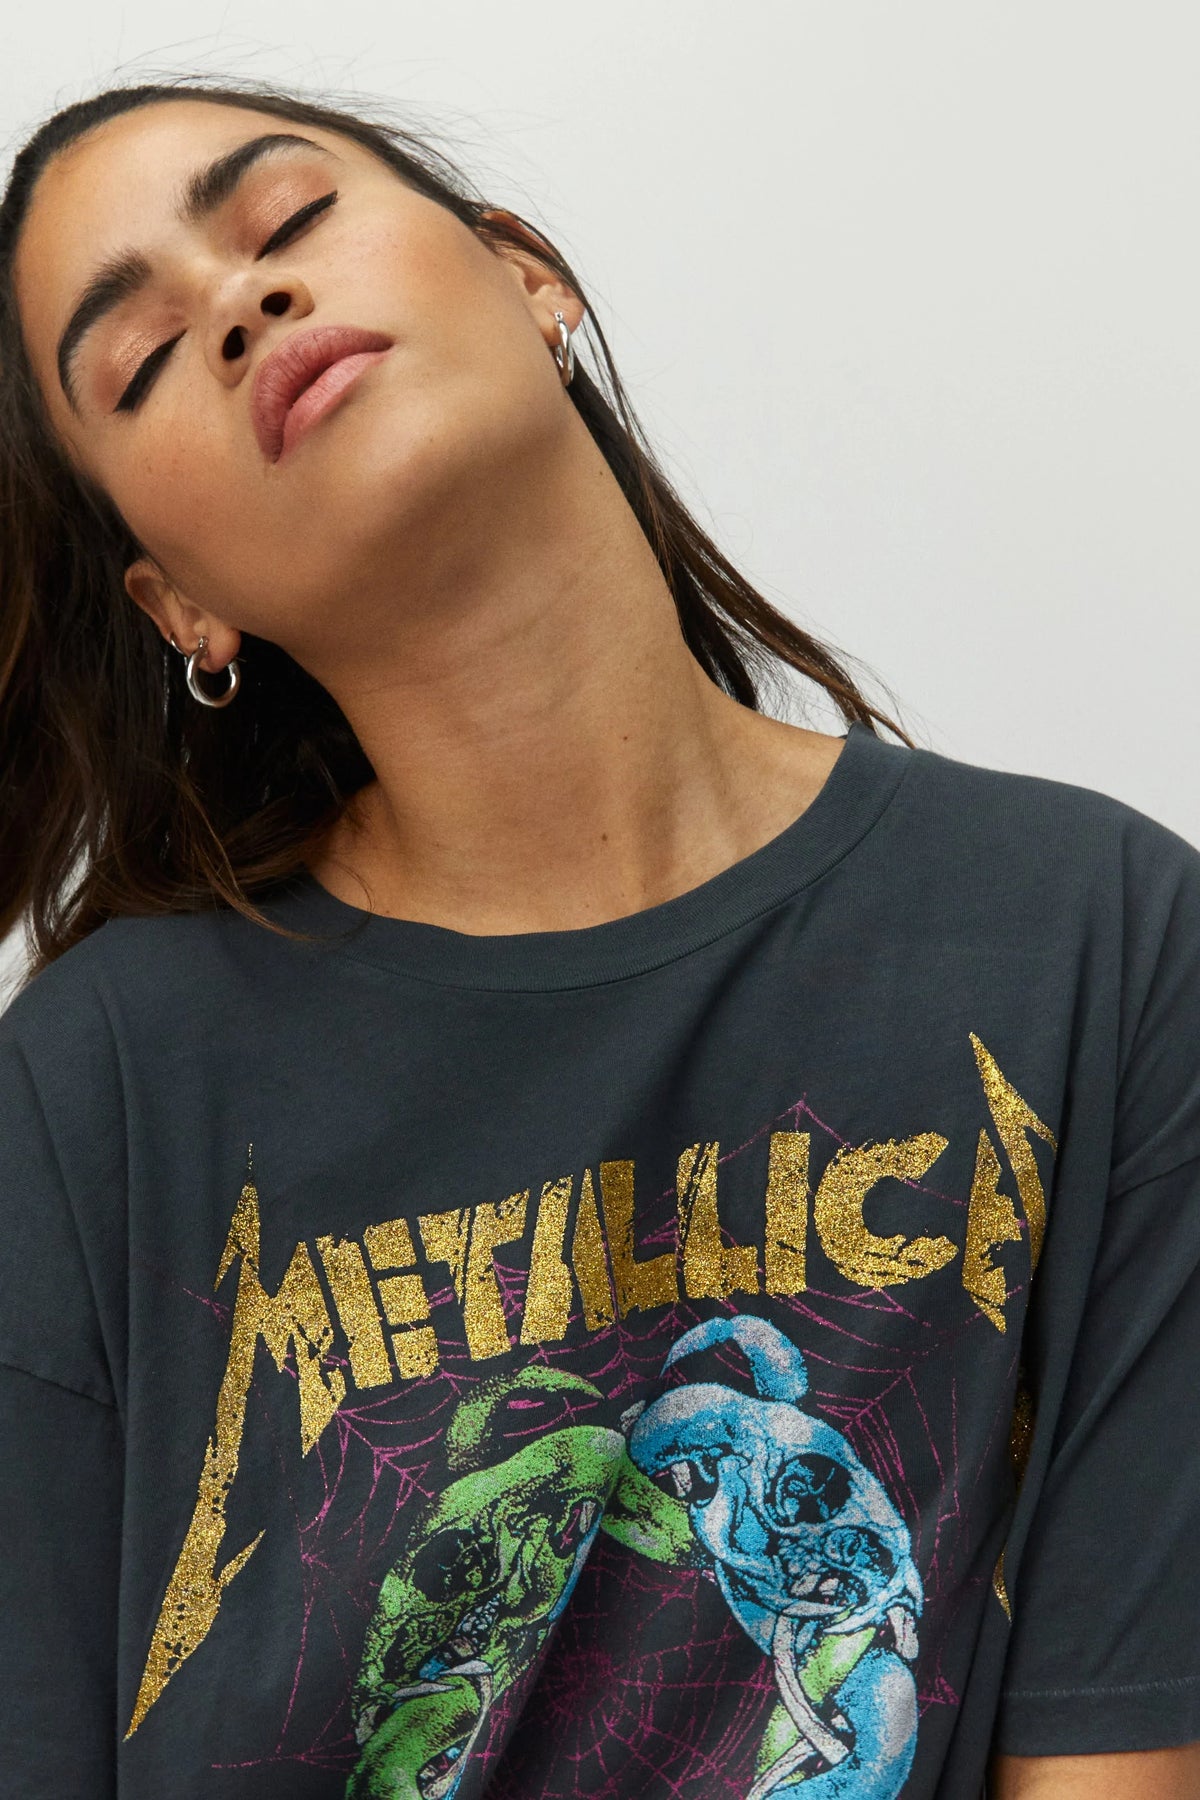 Metallica The Struggle Within Merch Tee